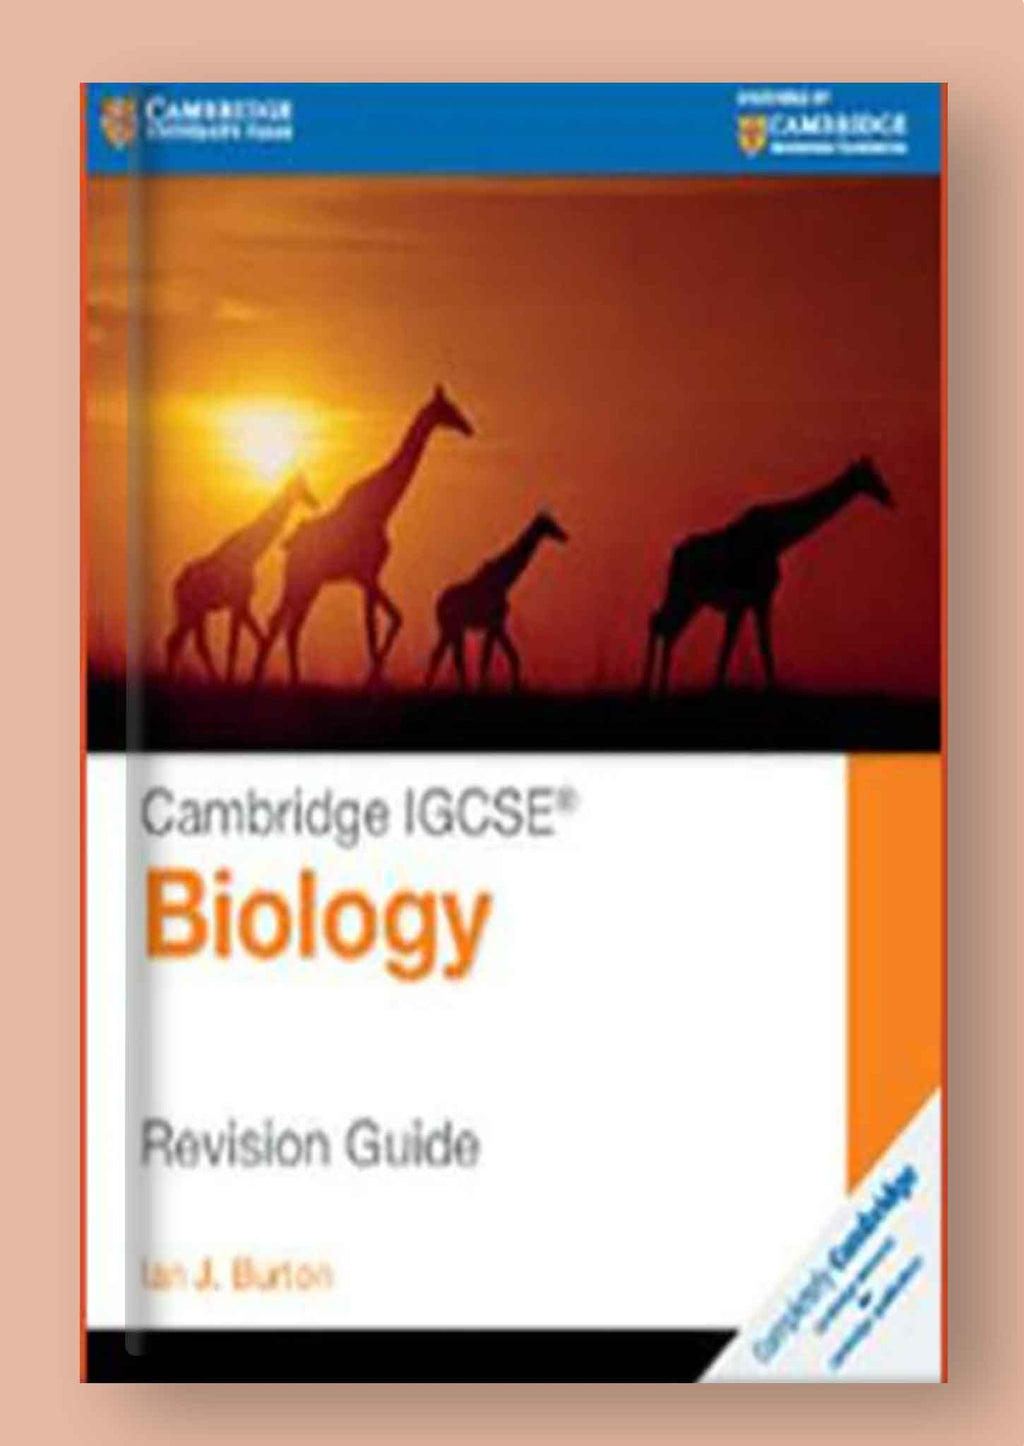 Cambridge IGCSE Biology (0610) Revision Guide